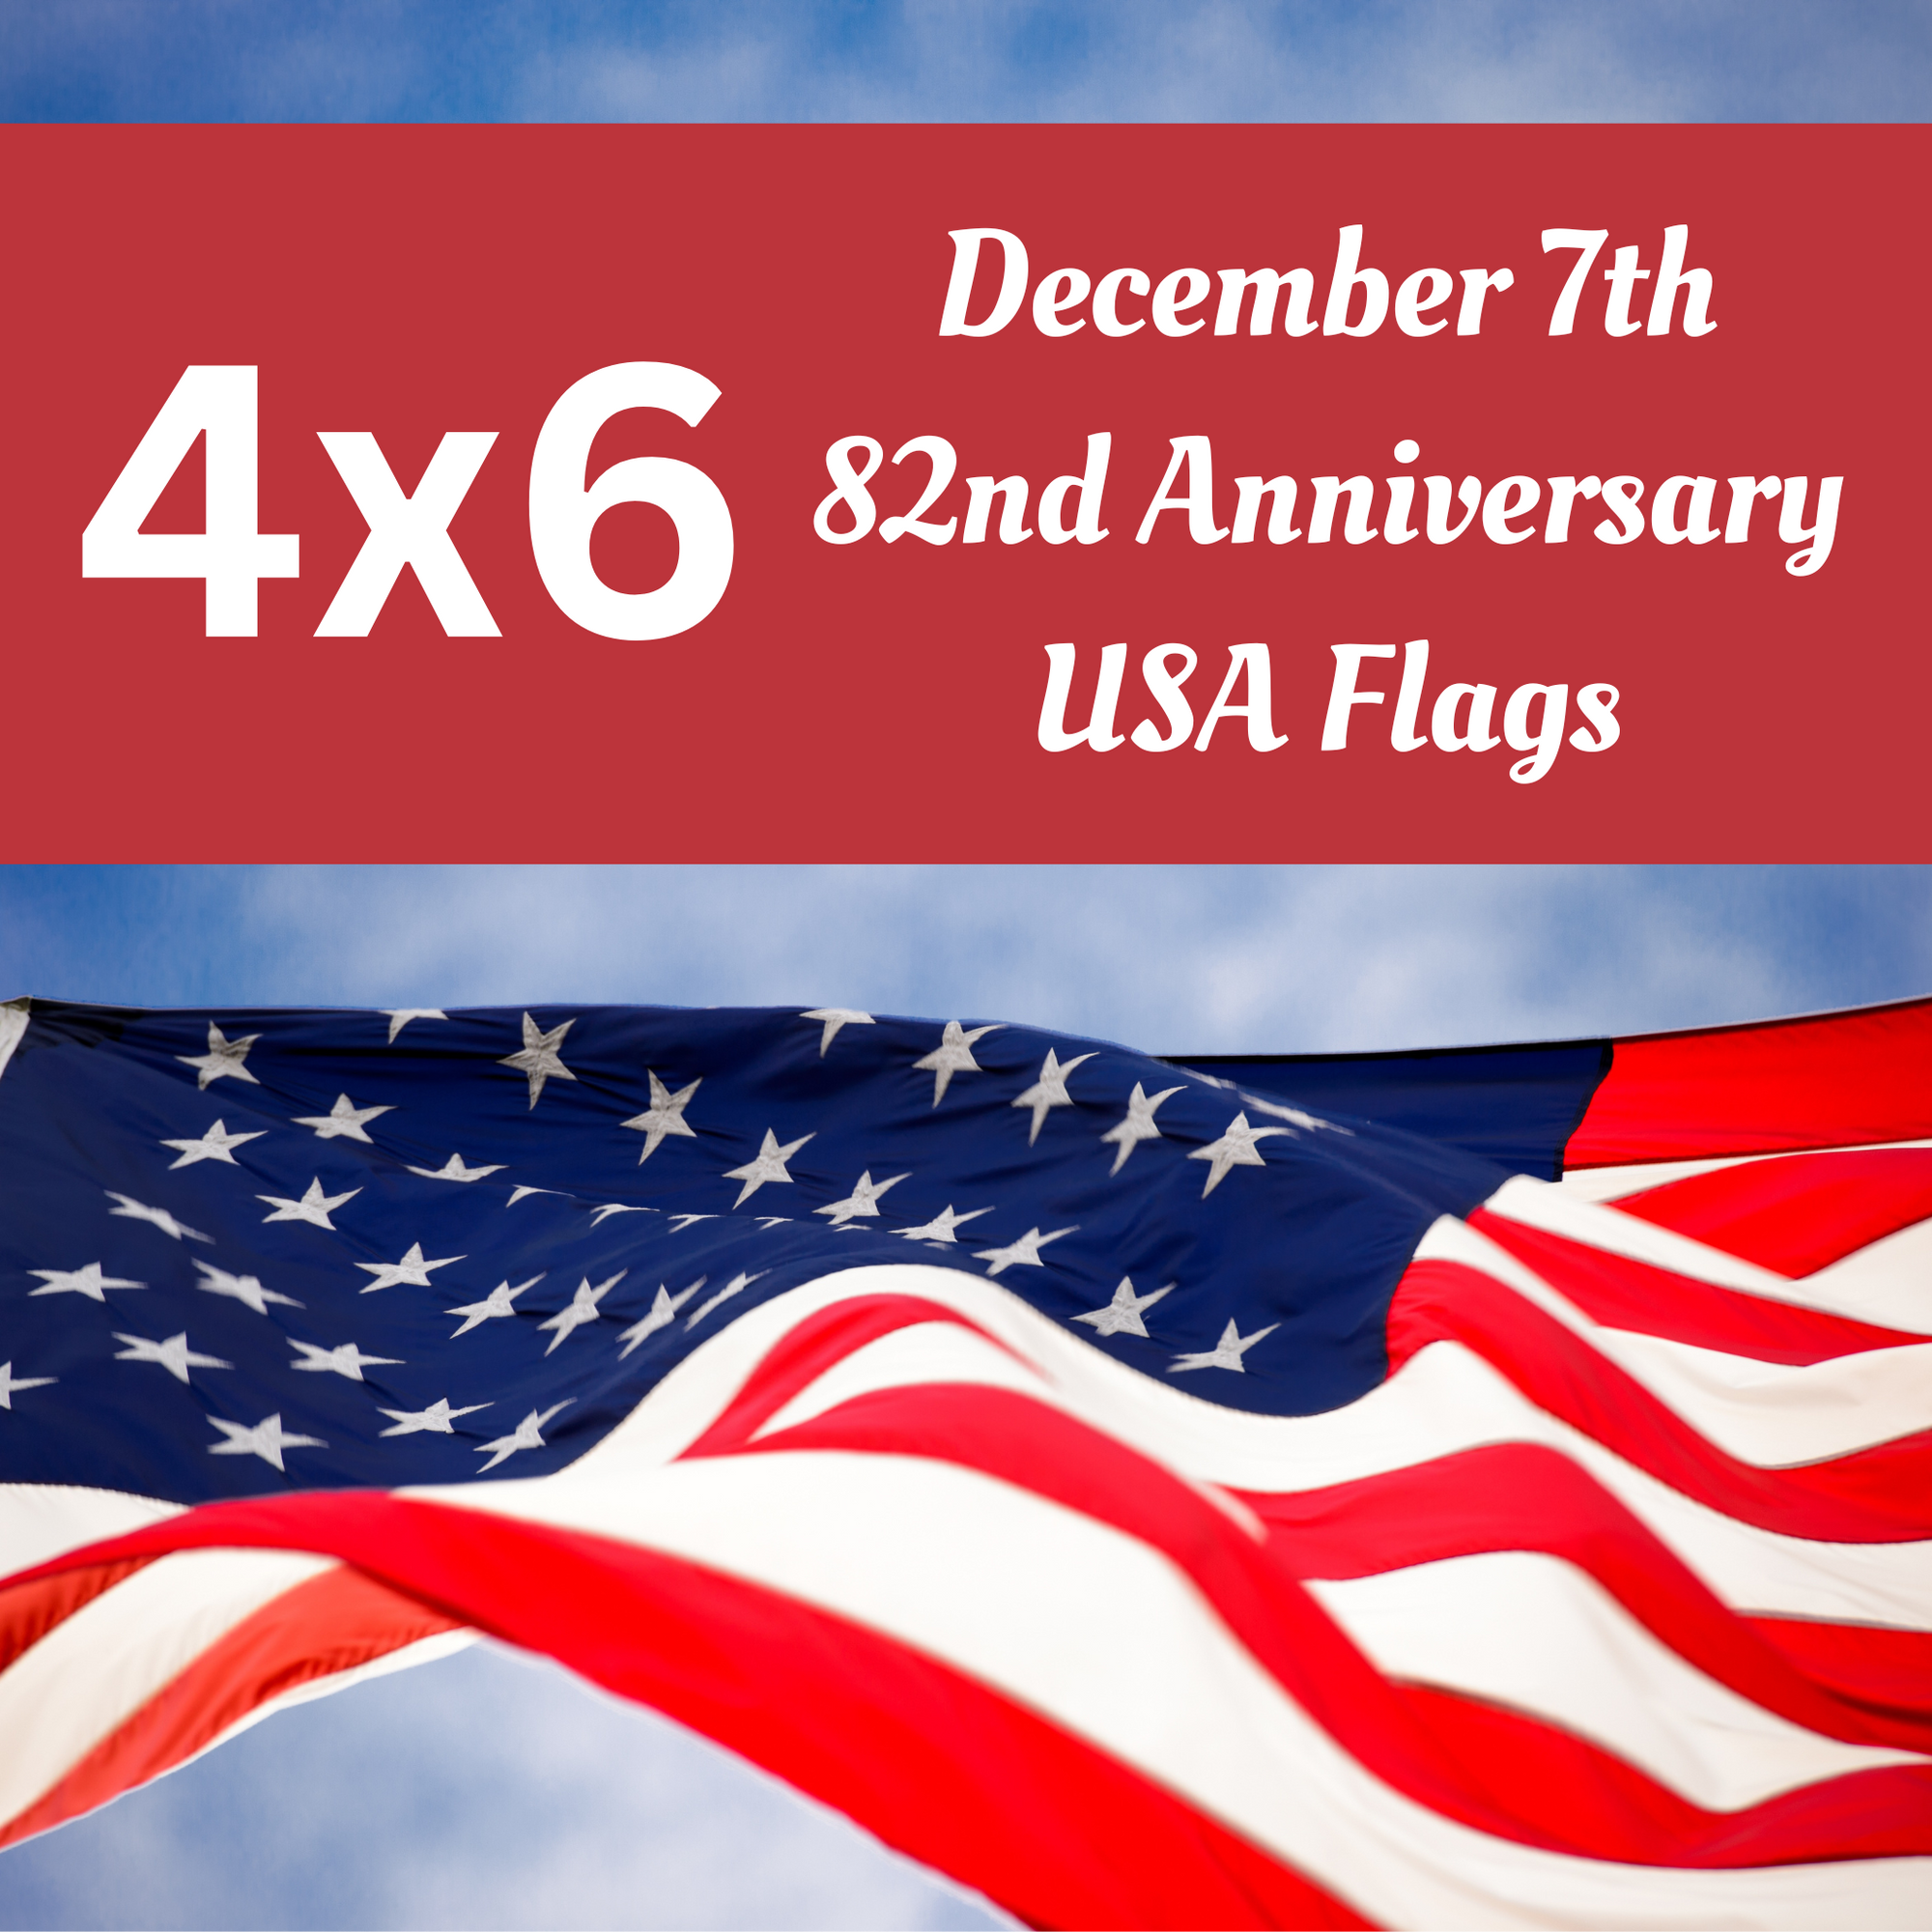 4x6 December 7th USA Flag Flown On USS Arizona Memorial At Pearl Harbor